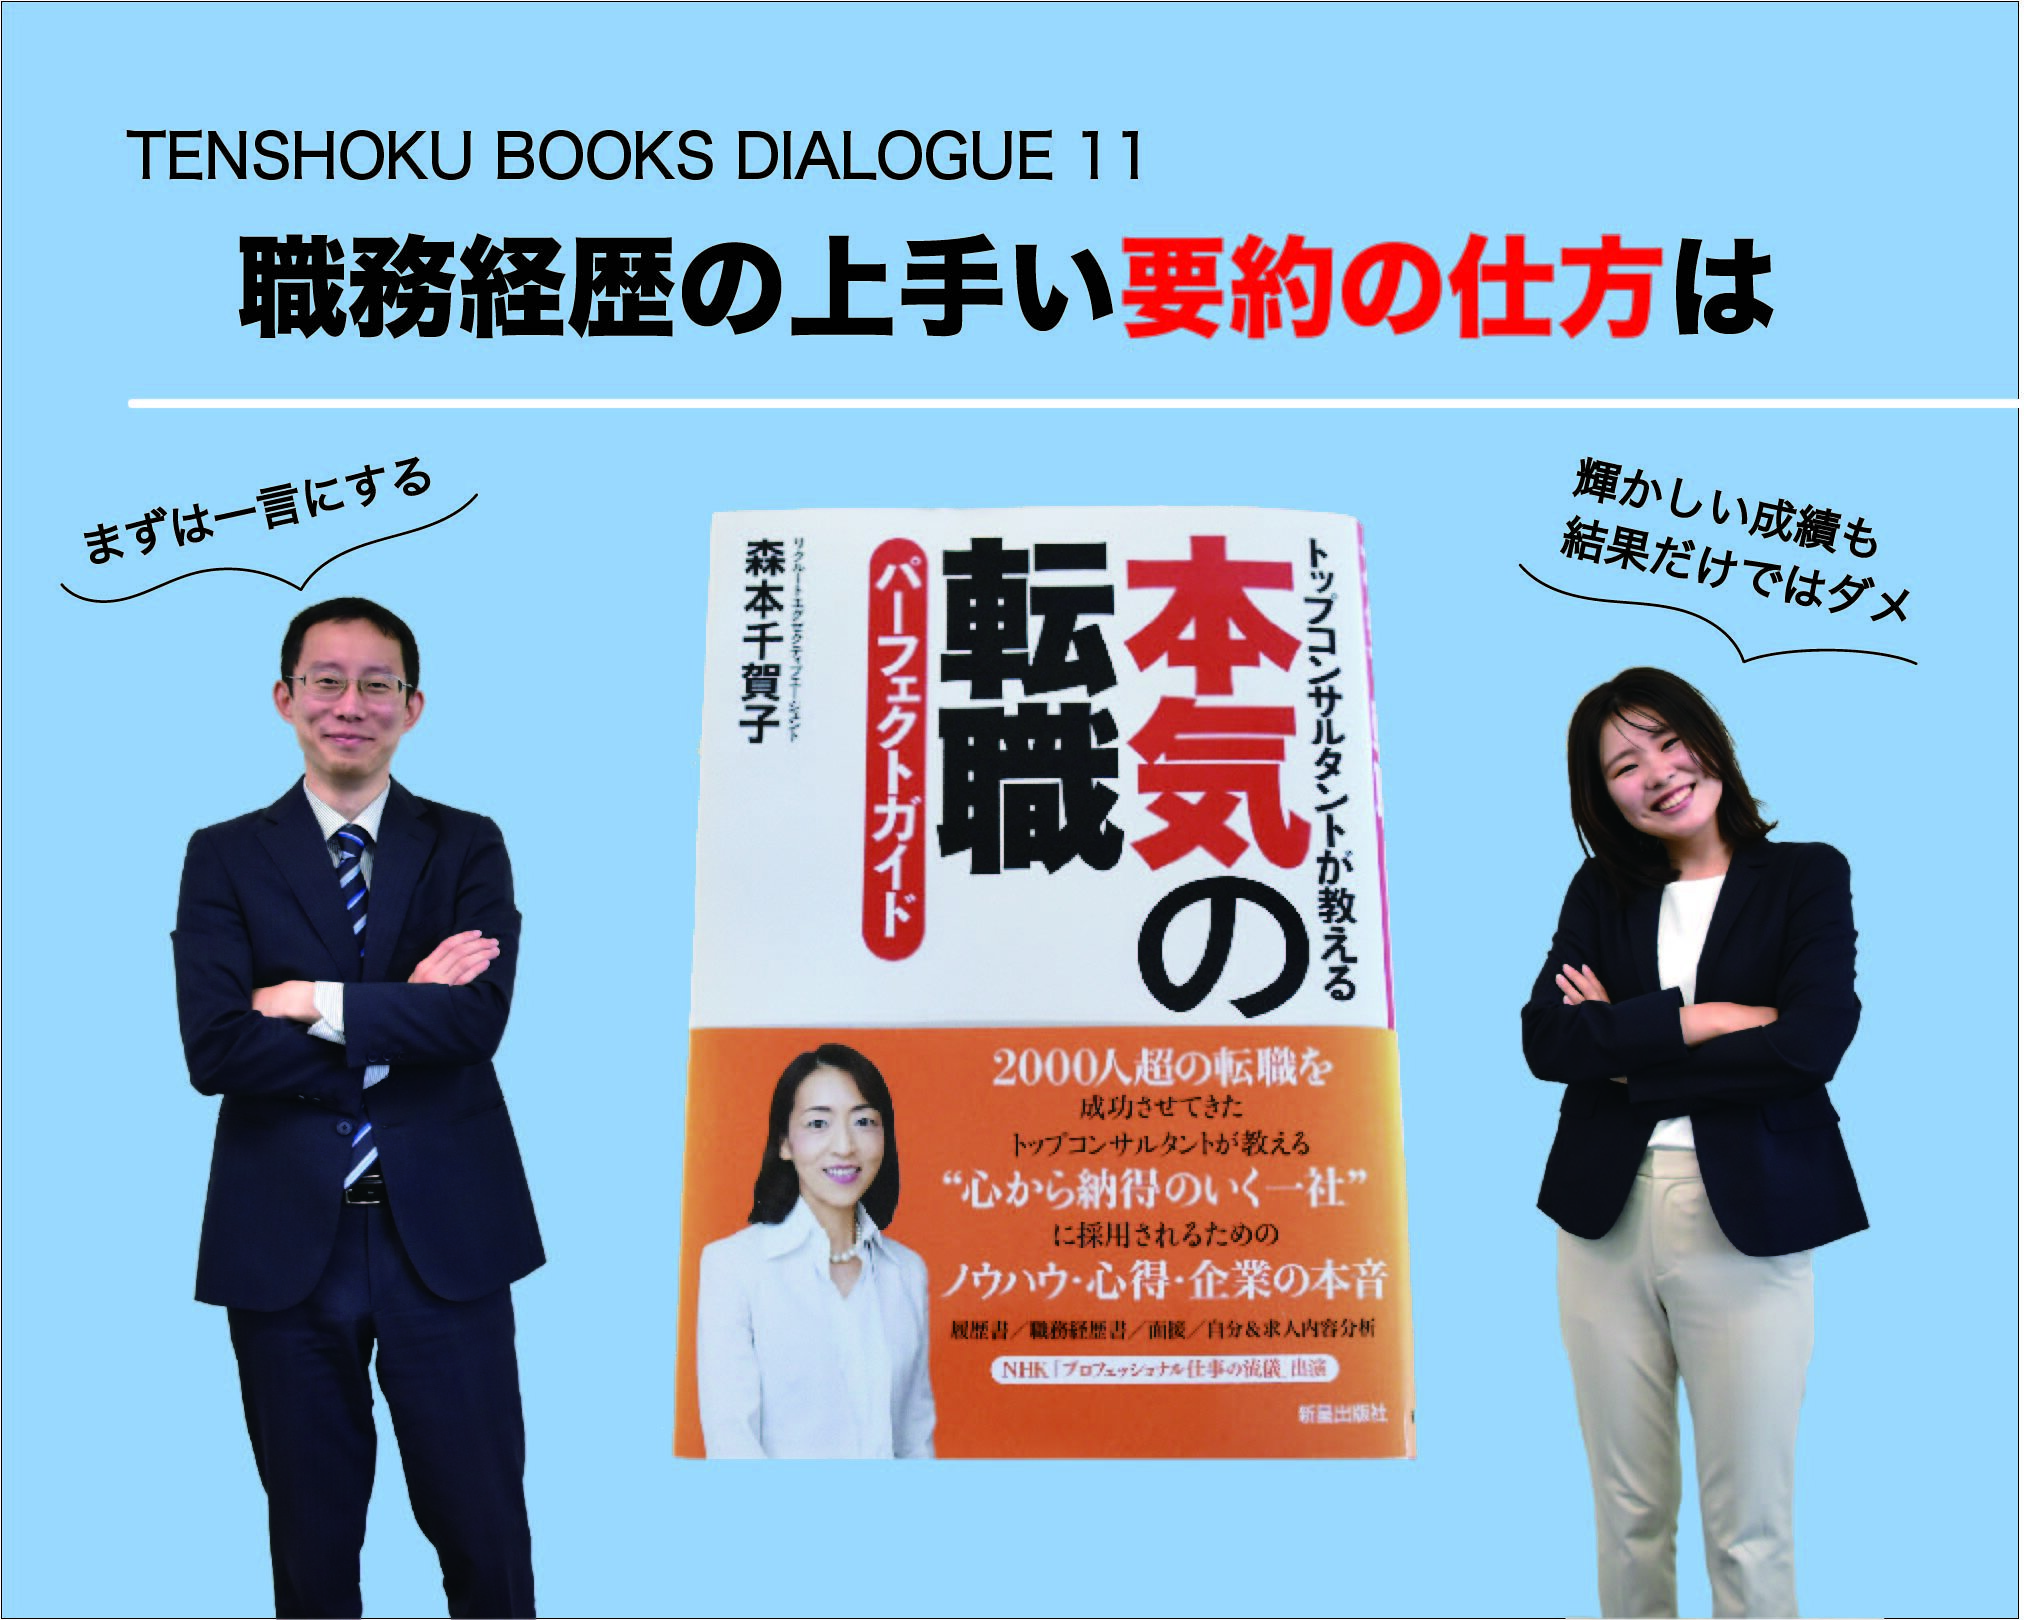 【TENSHOKU BOOKS DIALOGUE11】 『本気の転職パーフェクトガイド』から考える履歴書での自己PR